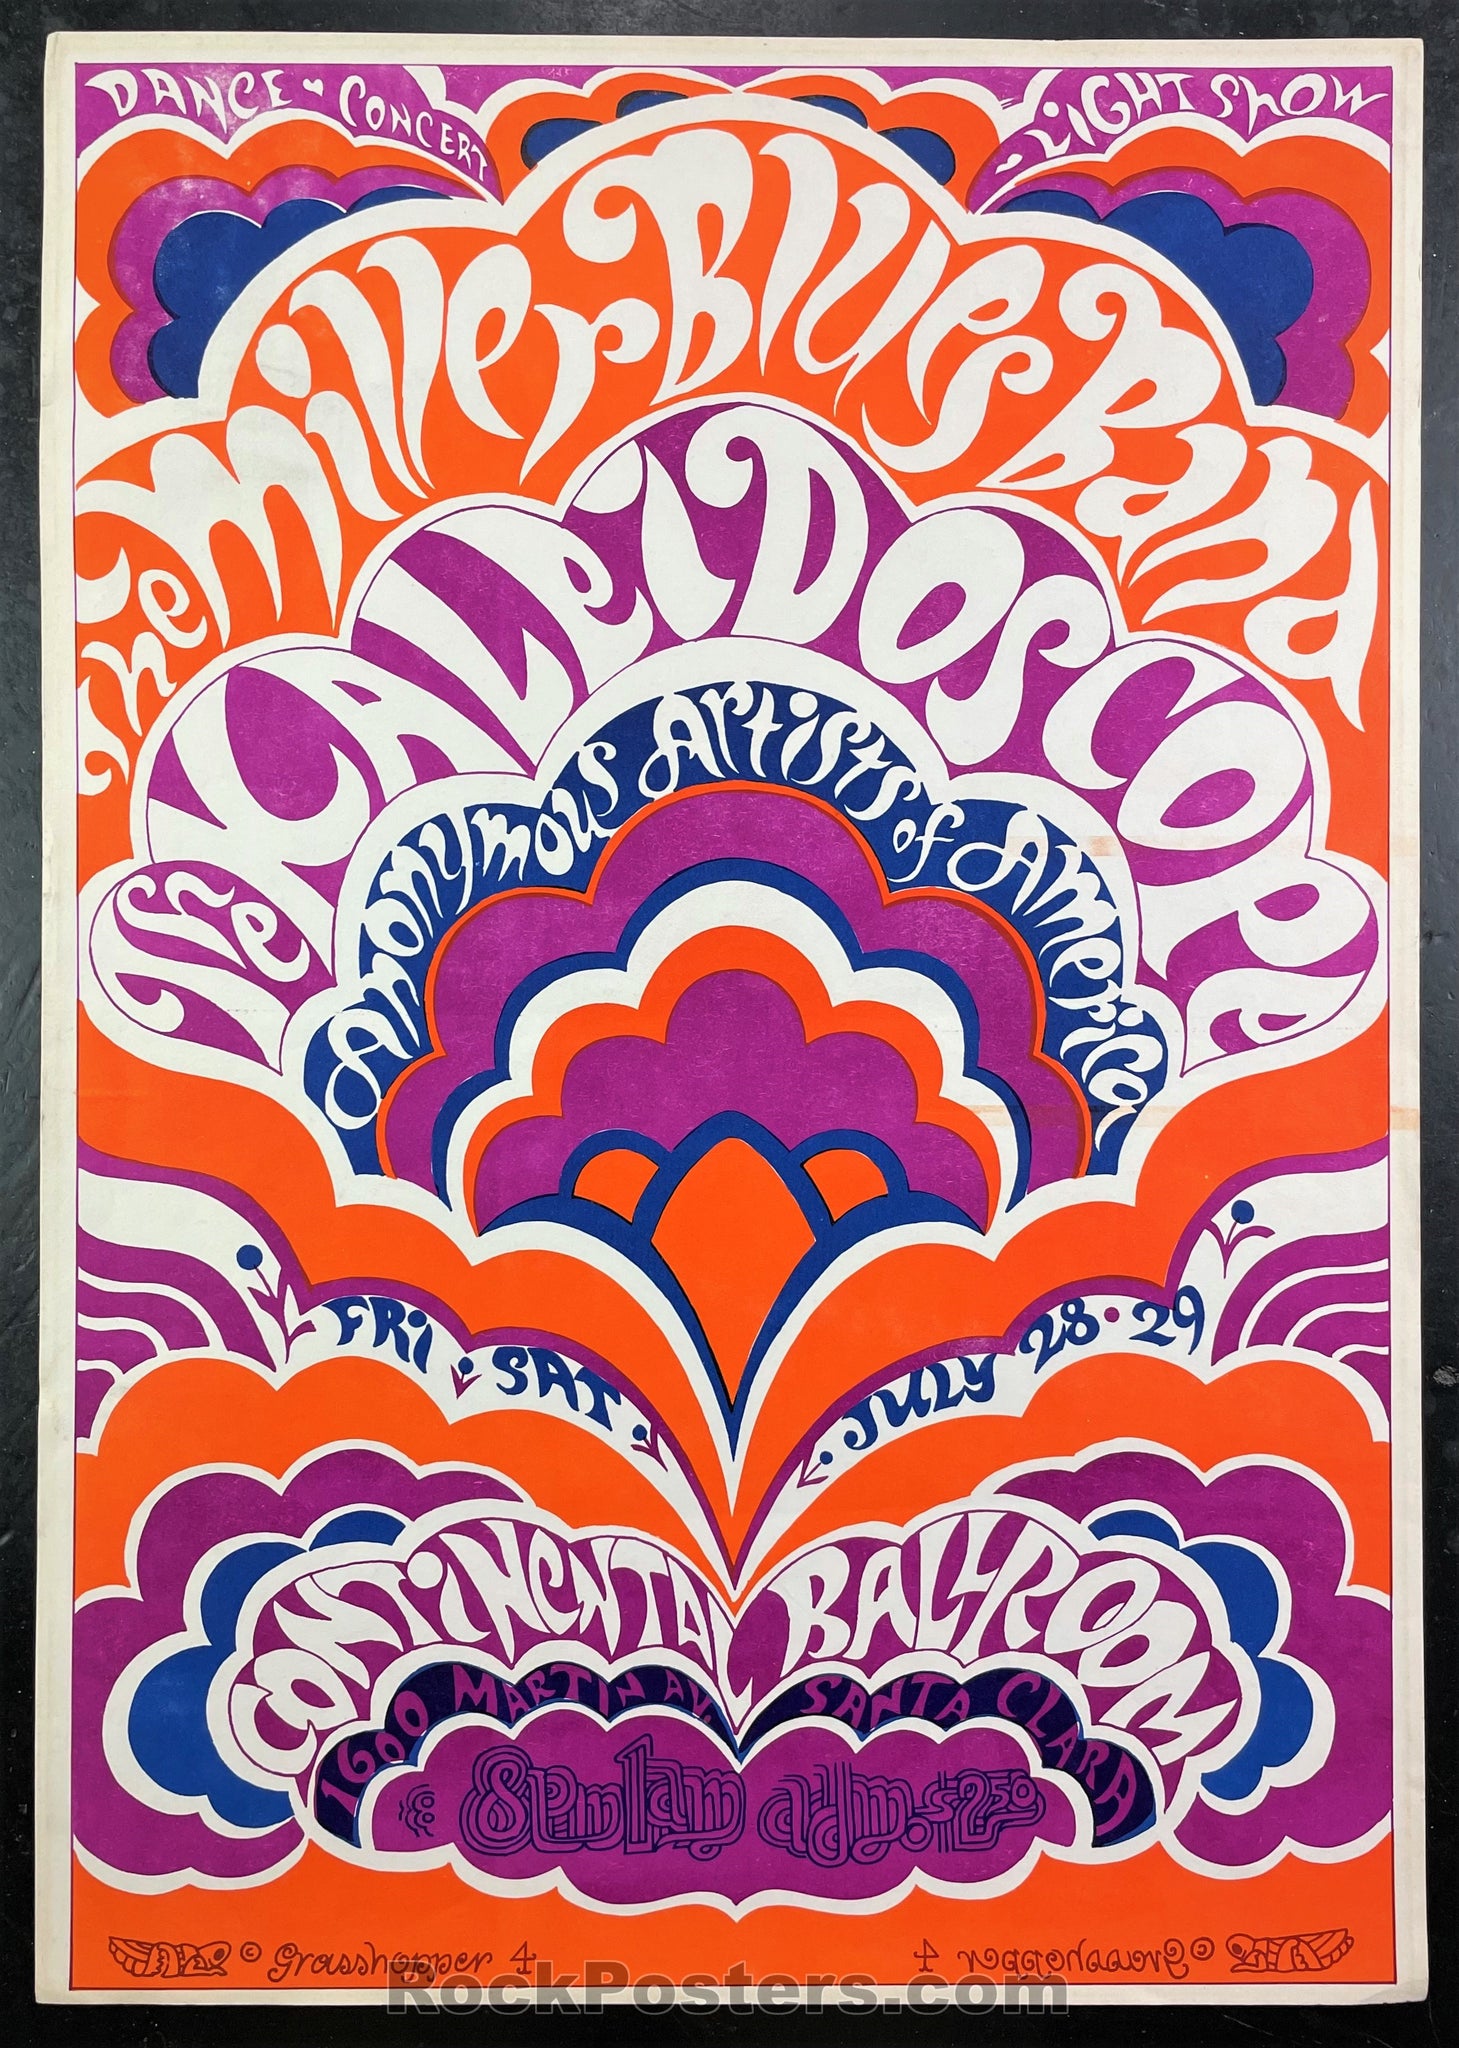 AUCTION - Steve Miller - Continental Ballroom - 1967 Poster - Excellent